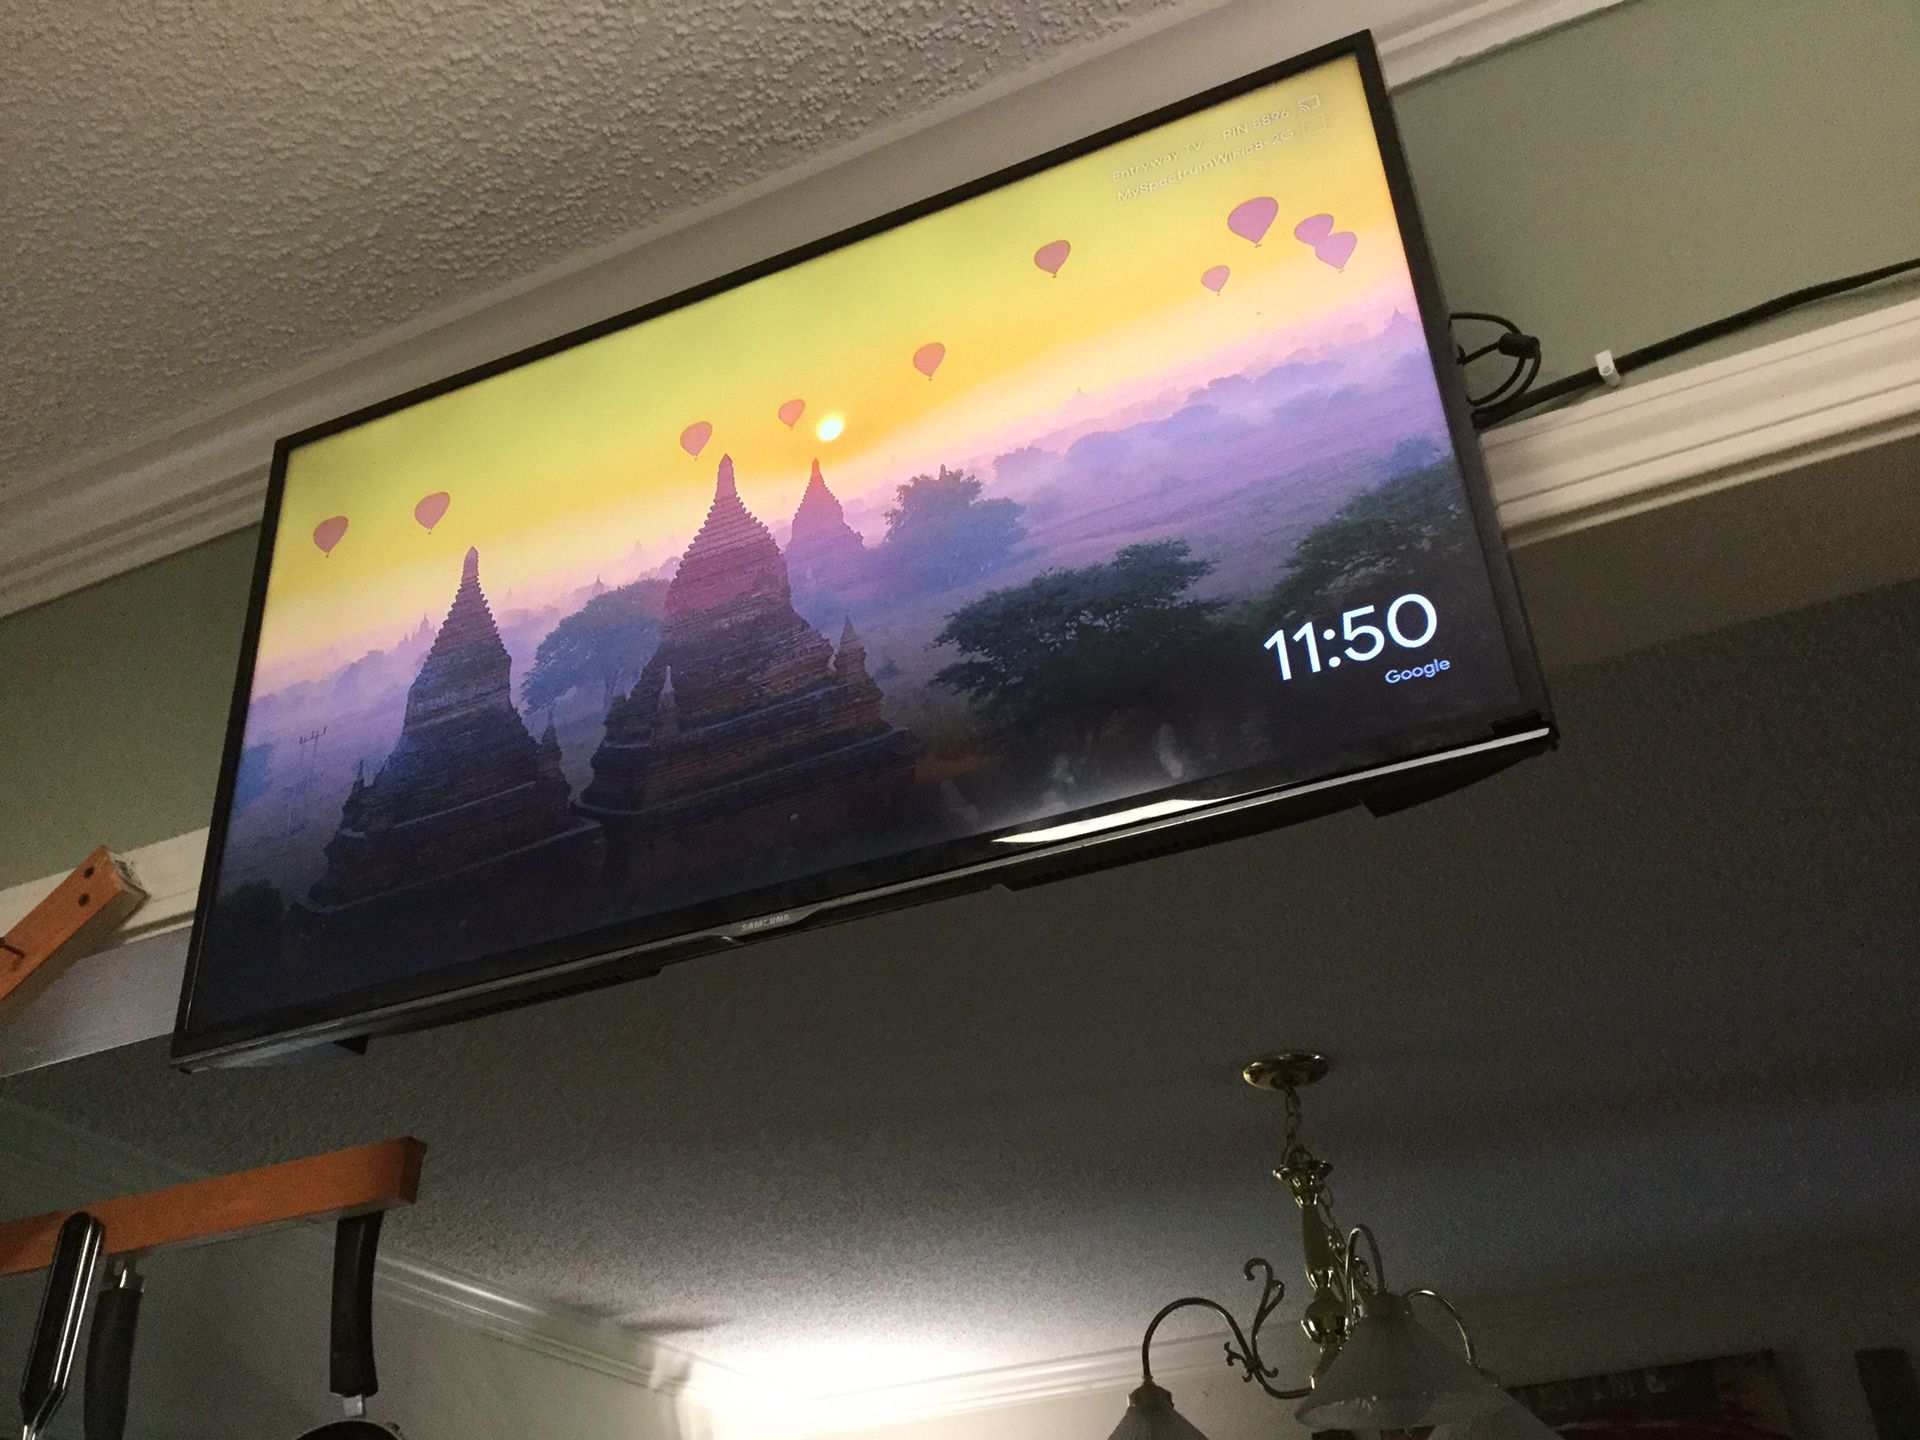 Samsung 32” smart led tv w wall mount